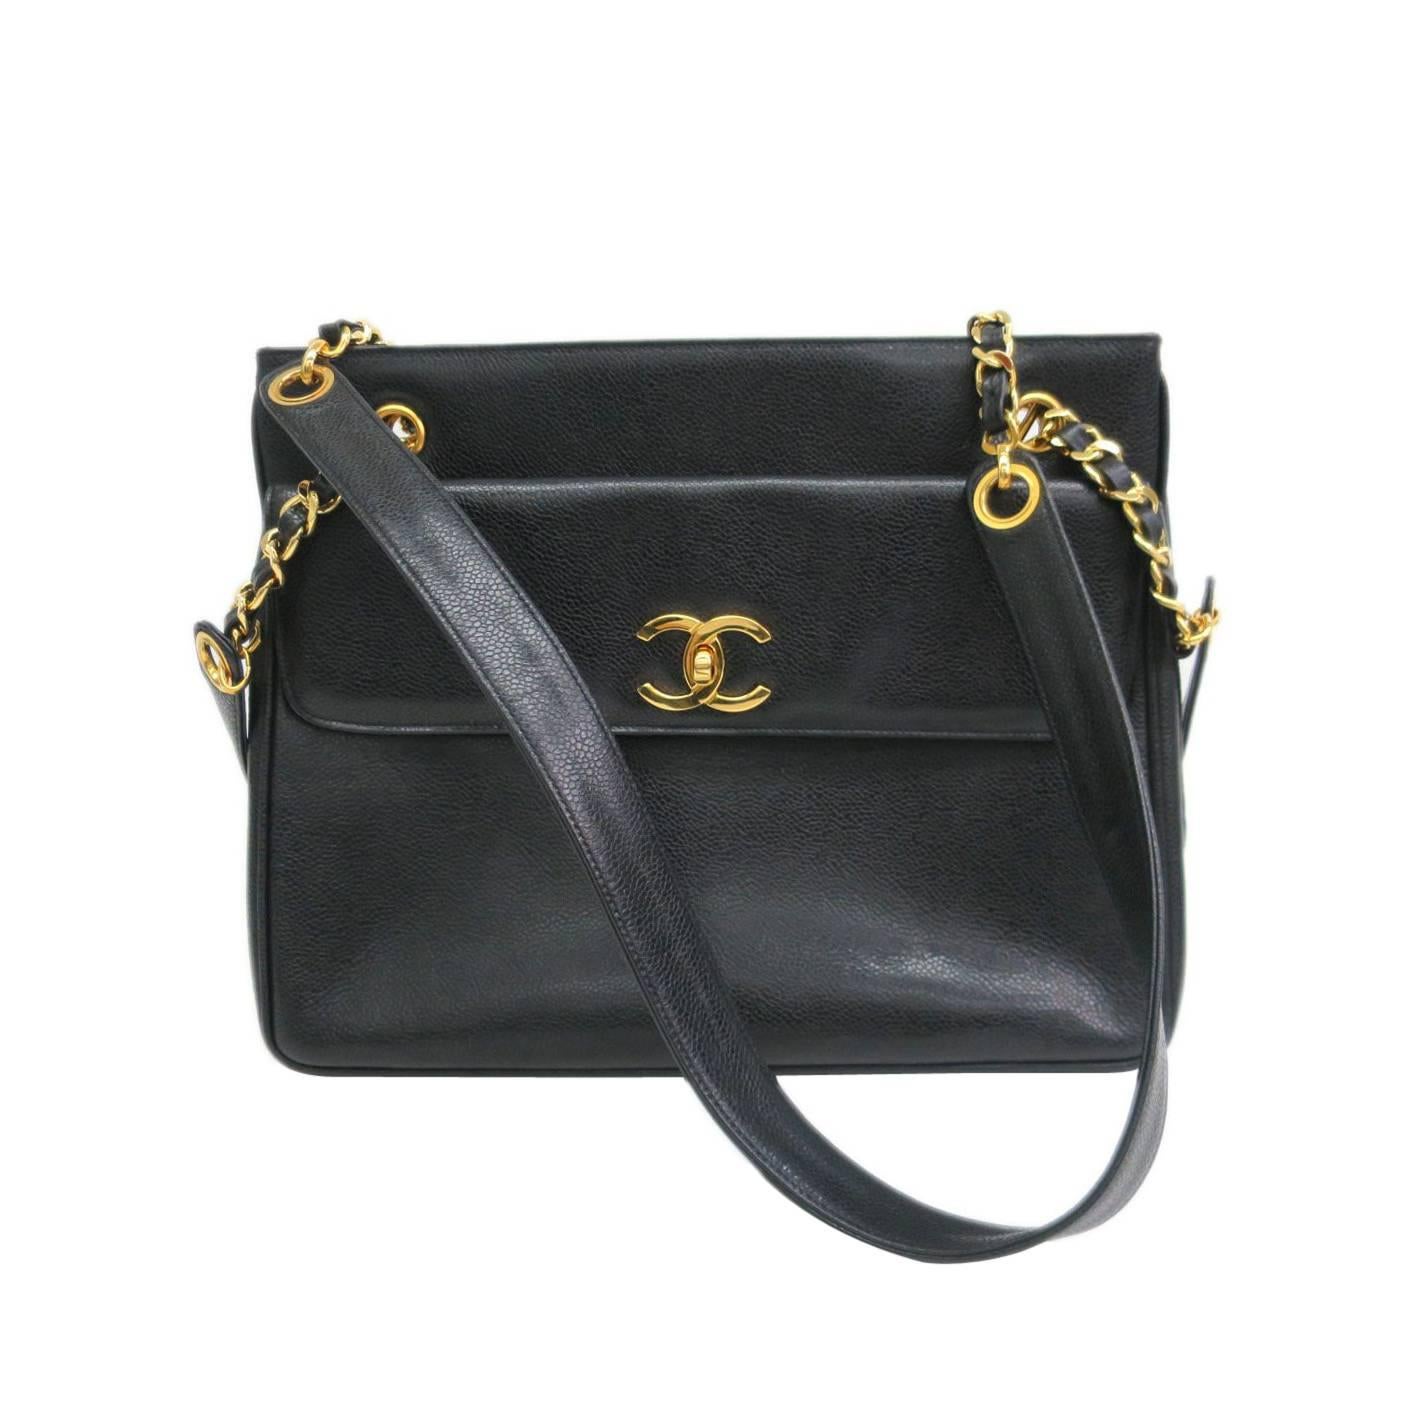 Chanel Black Caviar Leather Gold HW Chain Weekend Tote Shopper Shoulder Bag